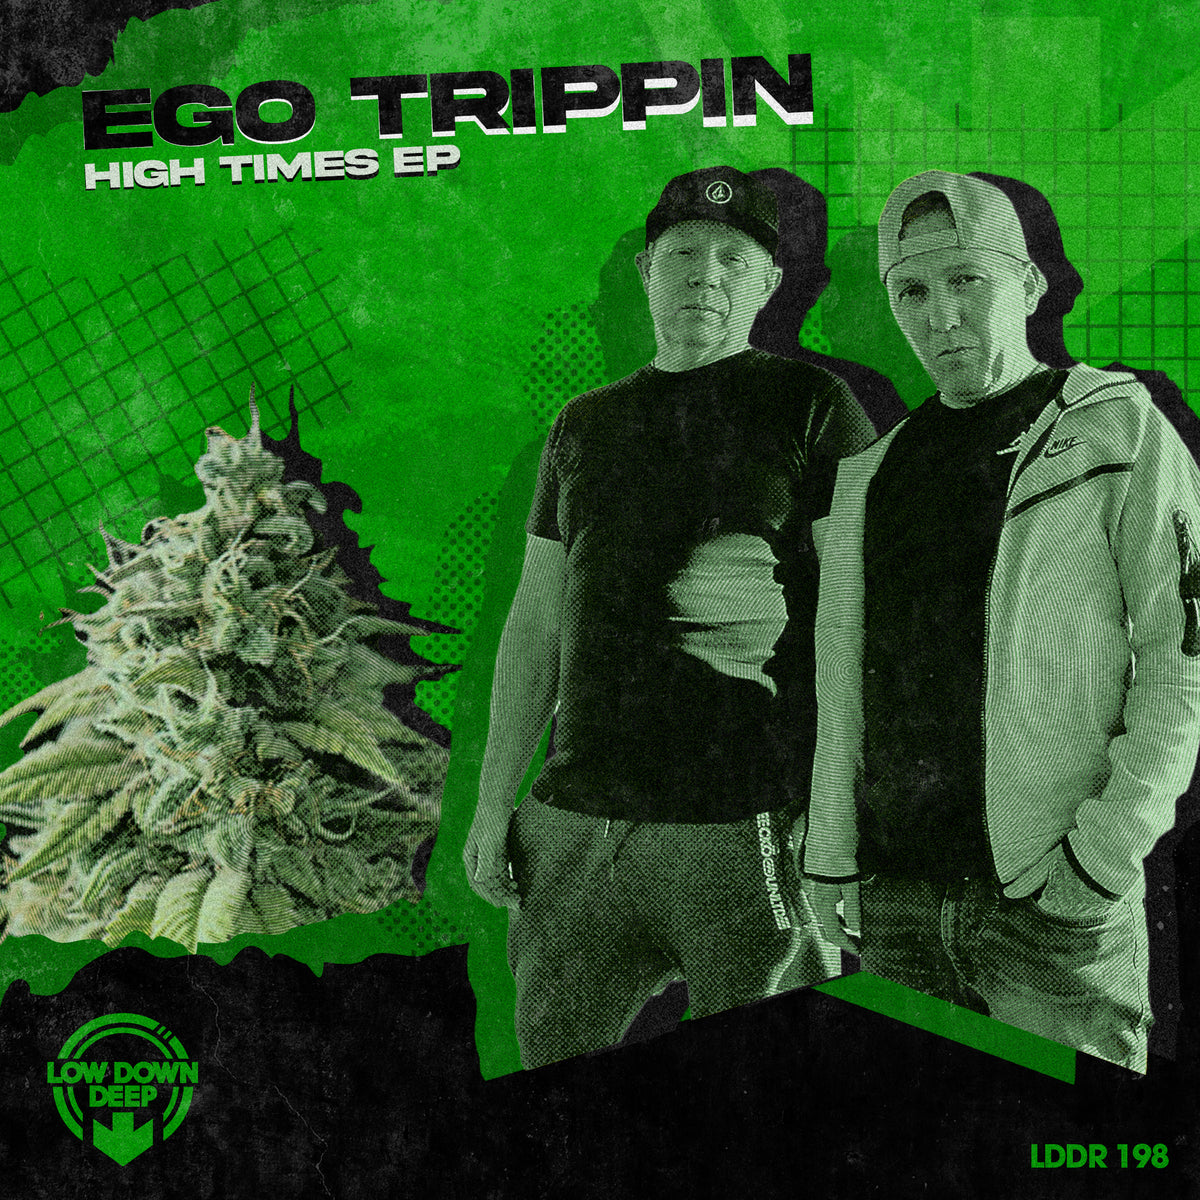 LDD 198 - Ego Trippin 'High Times EP'